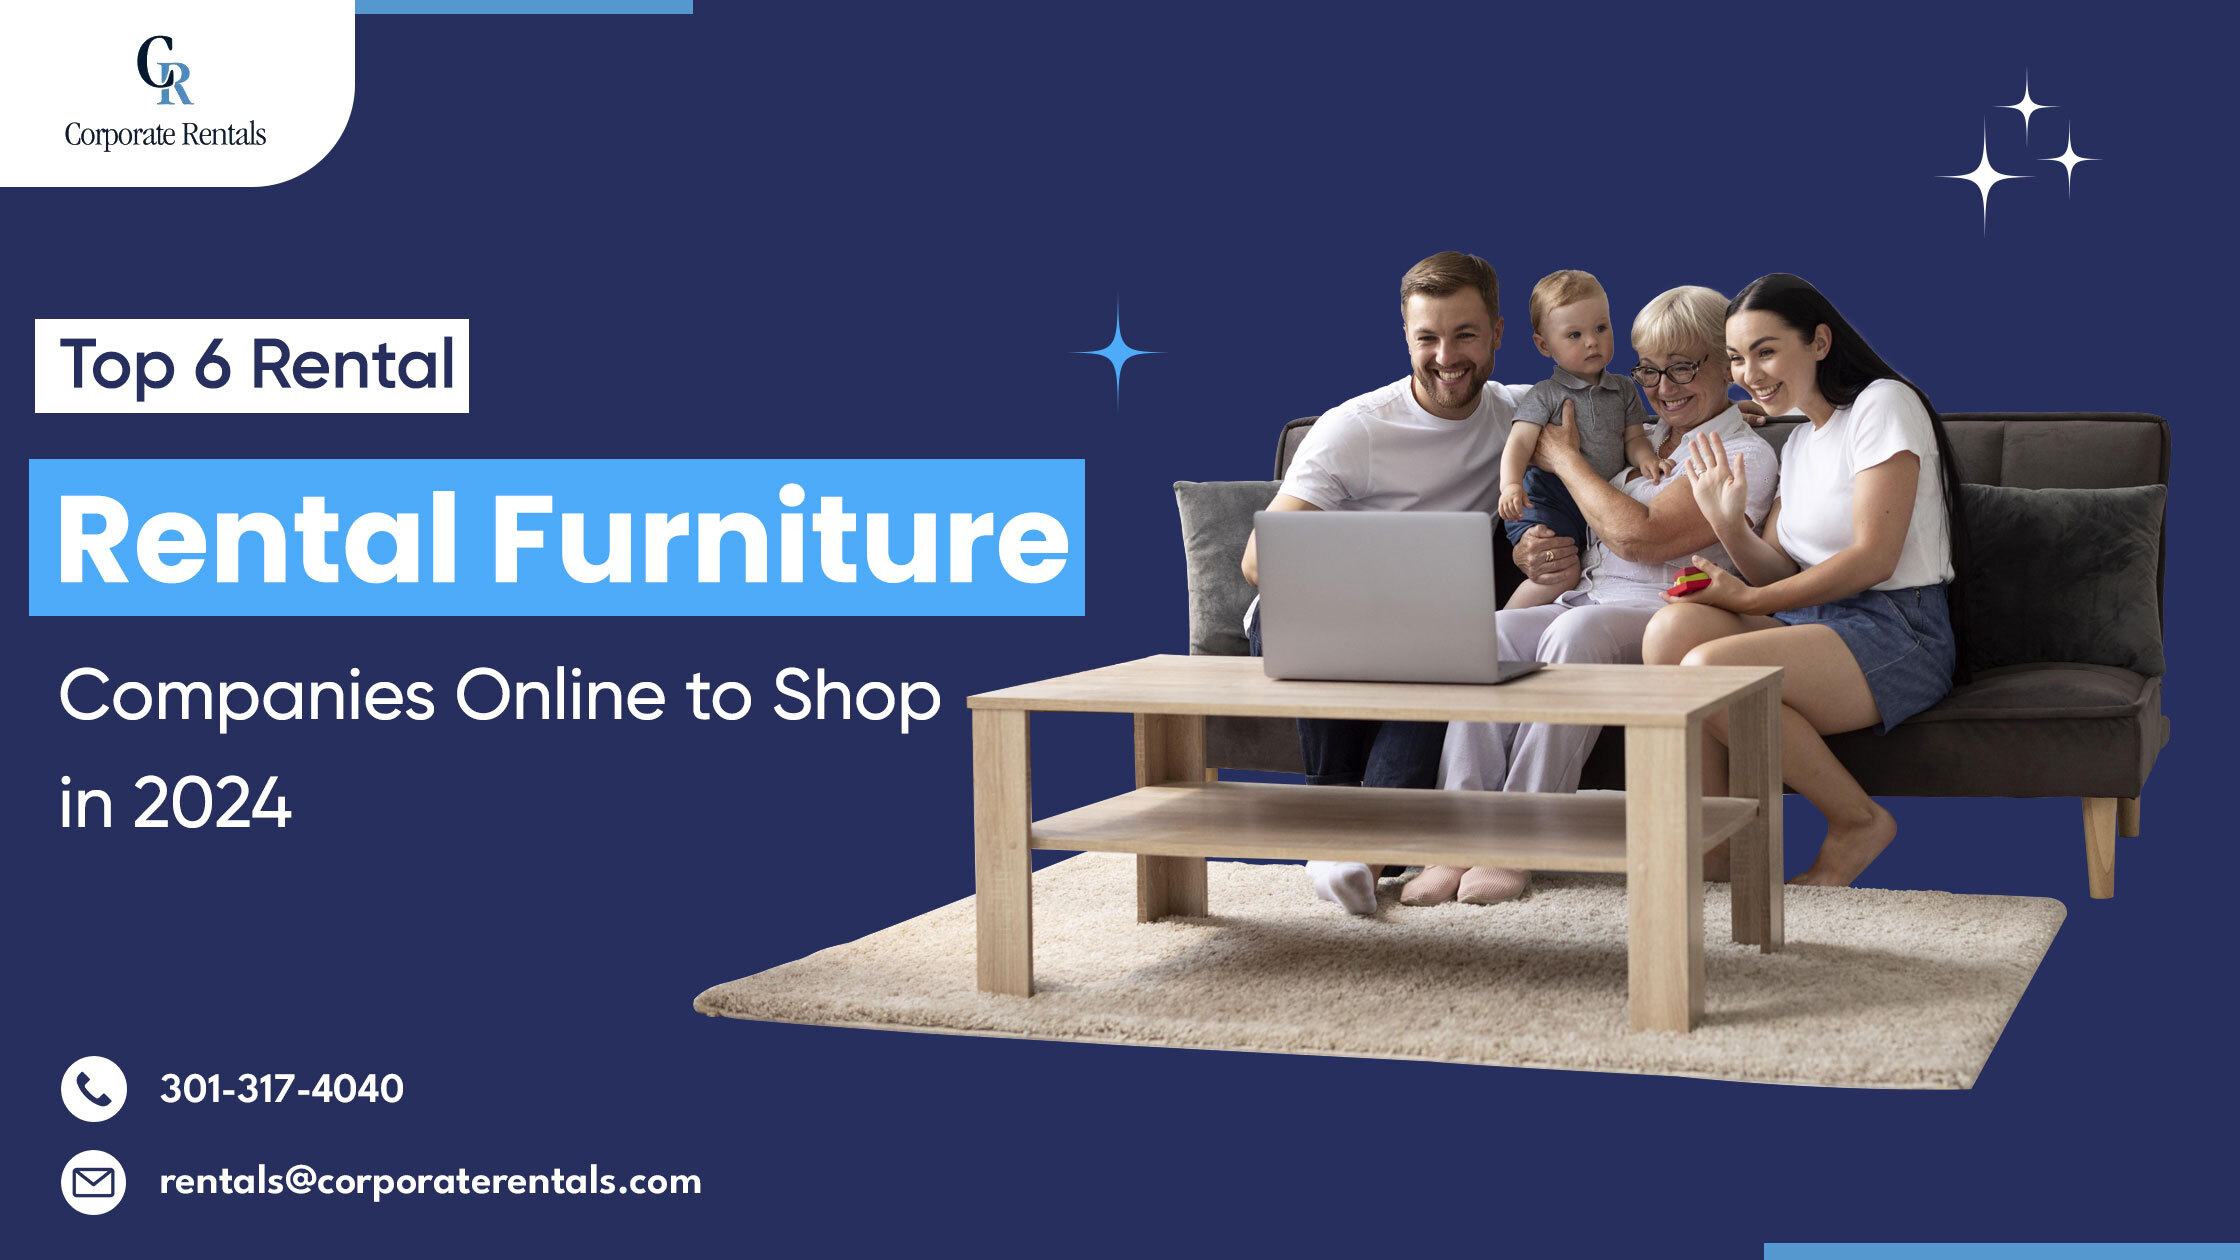 Top 6 Rental Furniture Companies Online to Shop in 2024